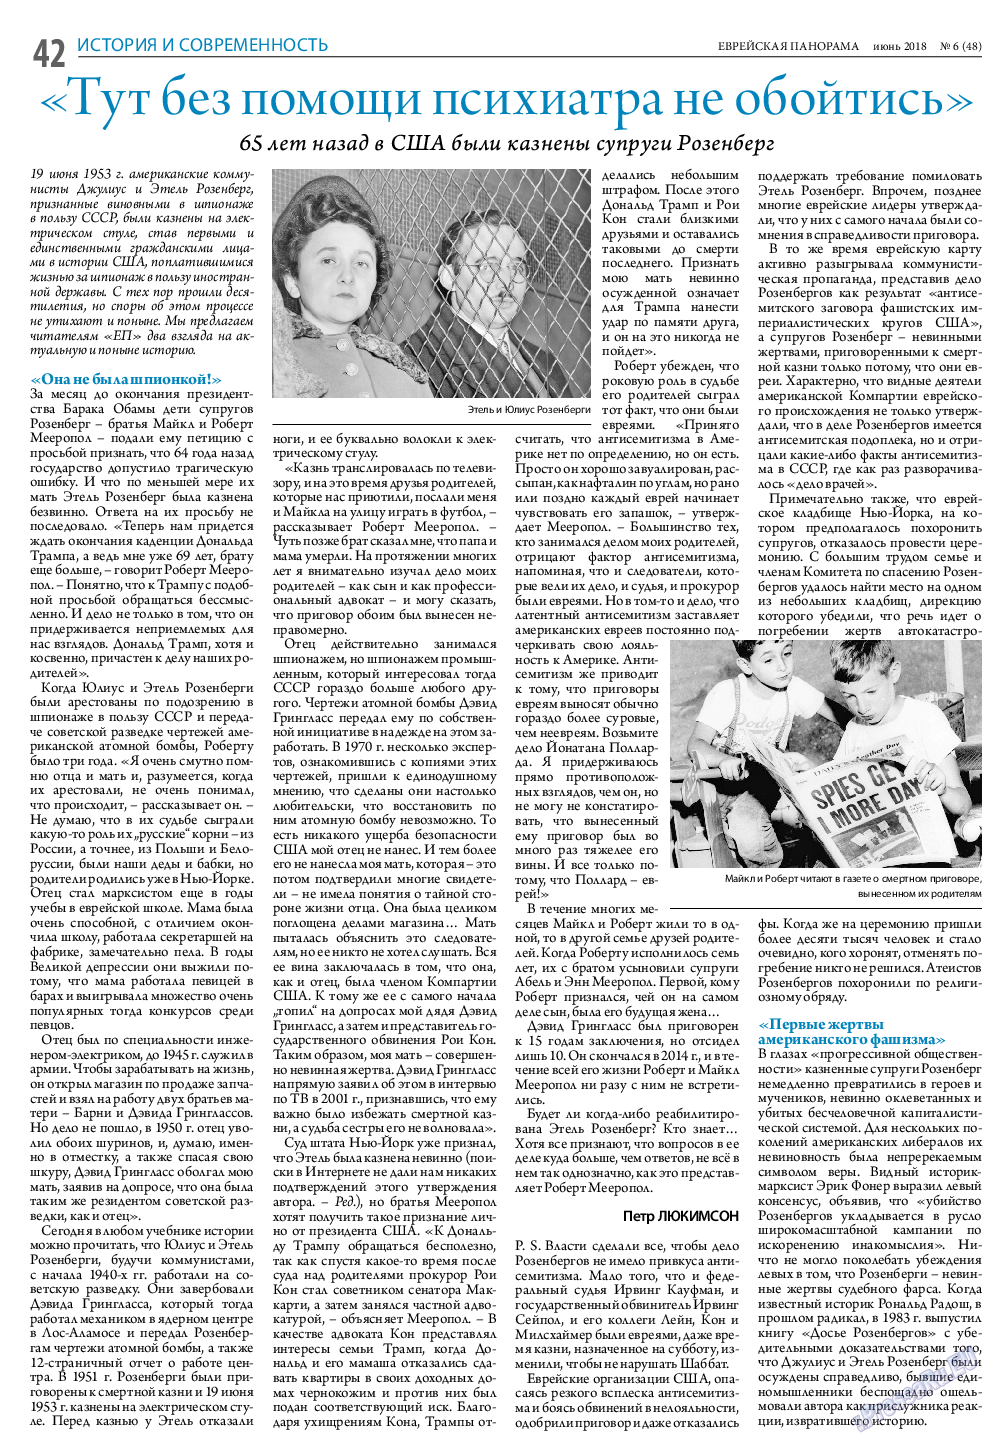 Еврейская панорама, газета. 2018 №6 стр.42